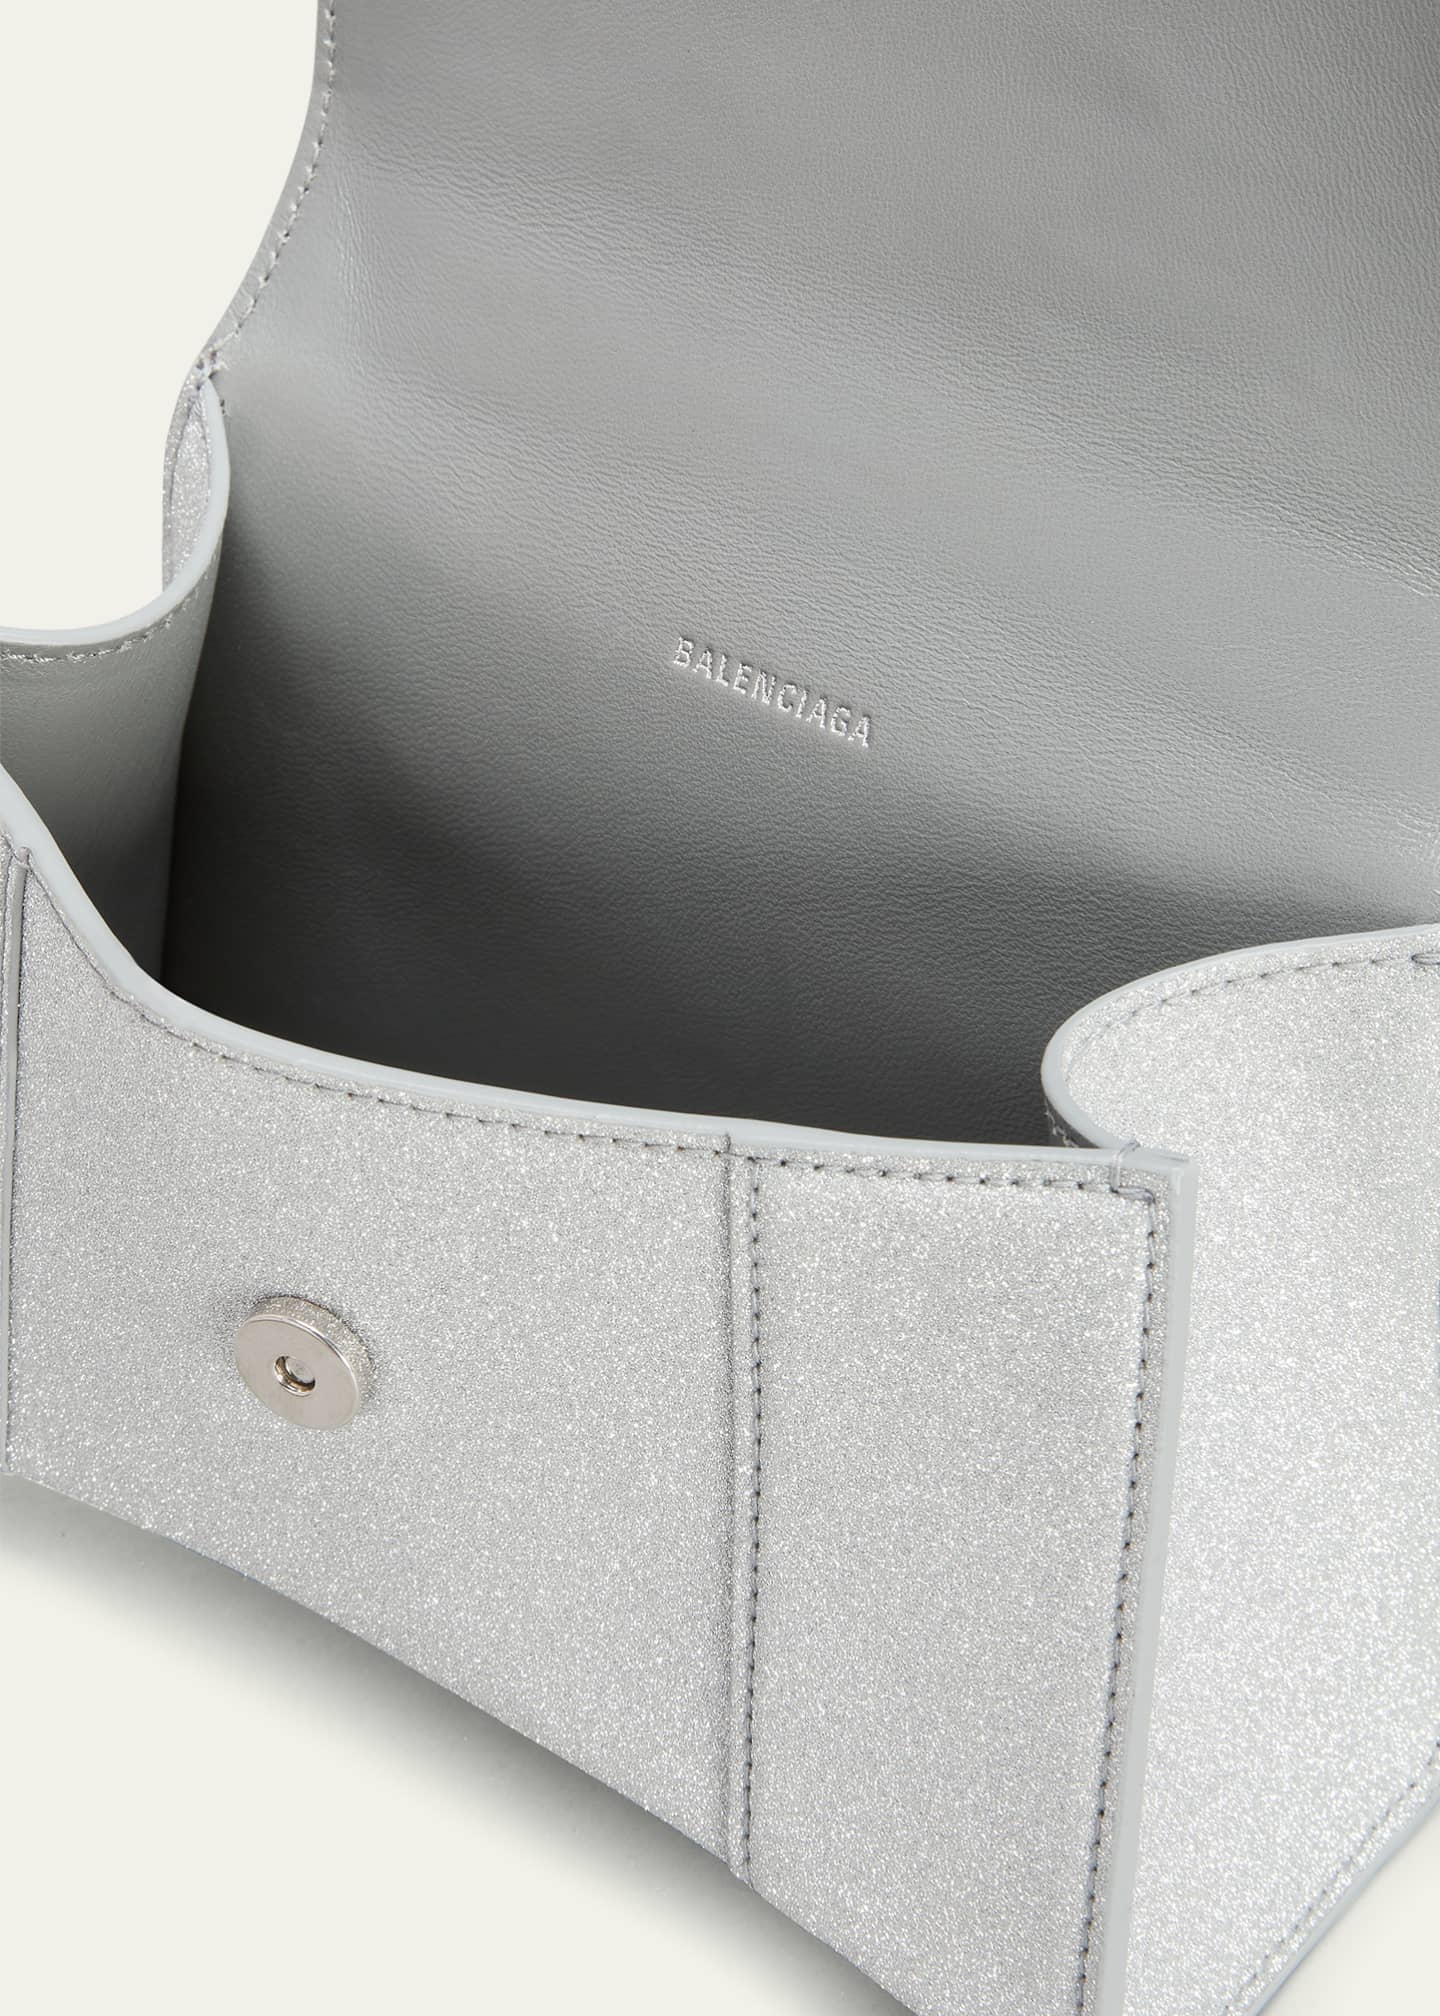 Balenciaga Hourglass XS Shiny Leather Top-Handle Bag - Bergdorf Goodman